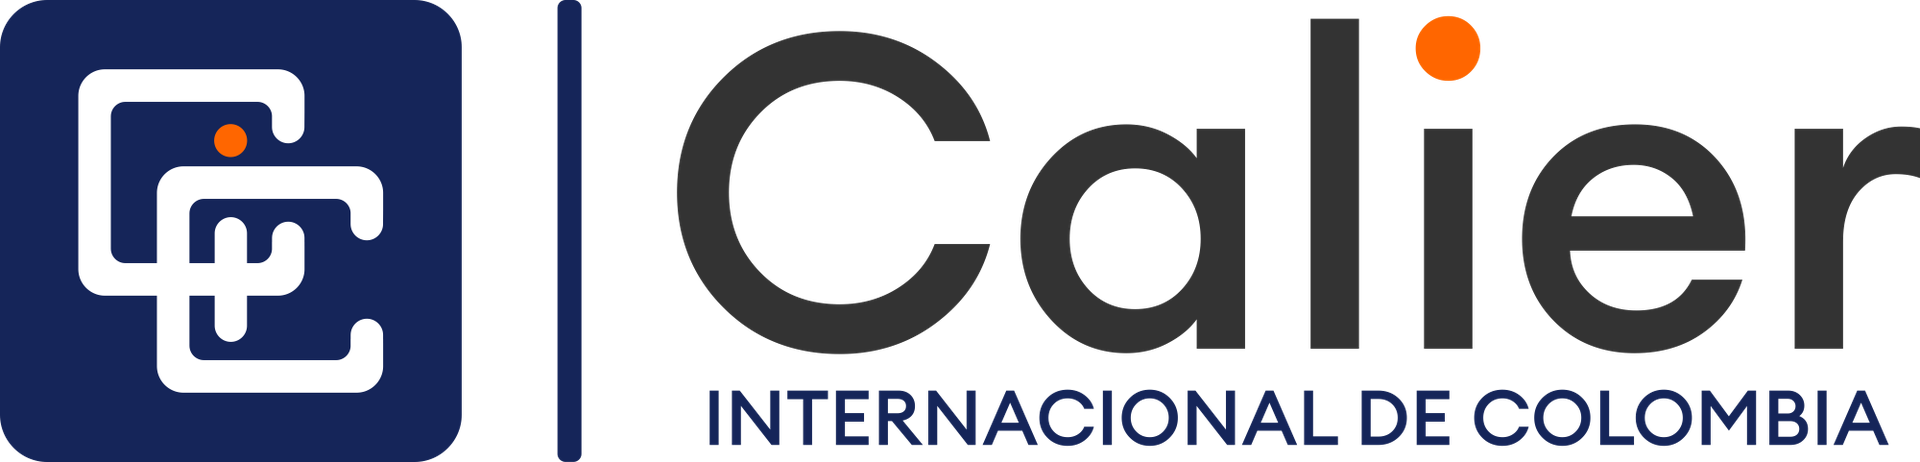 Calier Internacional de Colombia SA